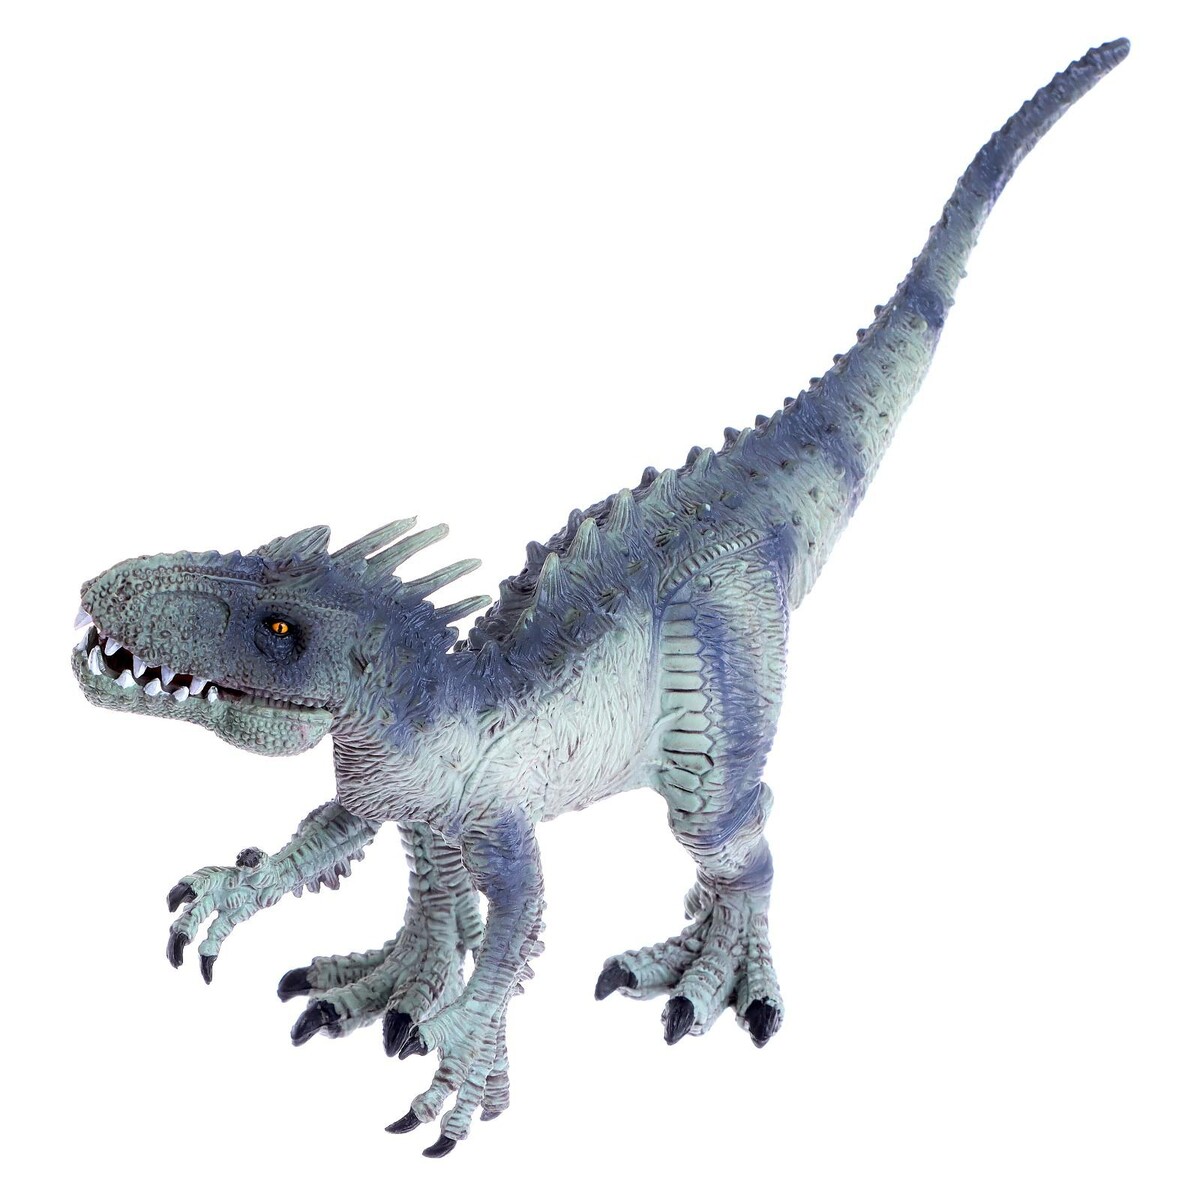 Фигурка динозавра фигурка динозавра schleich карнотавр